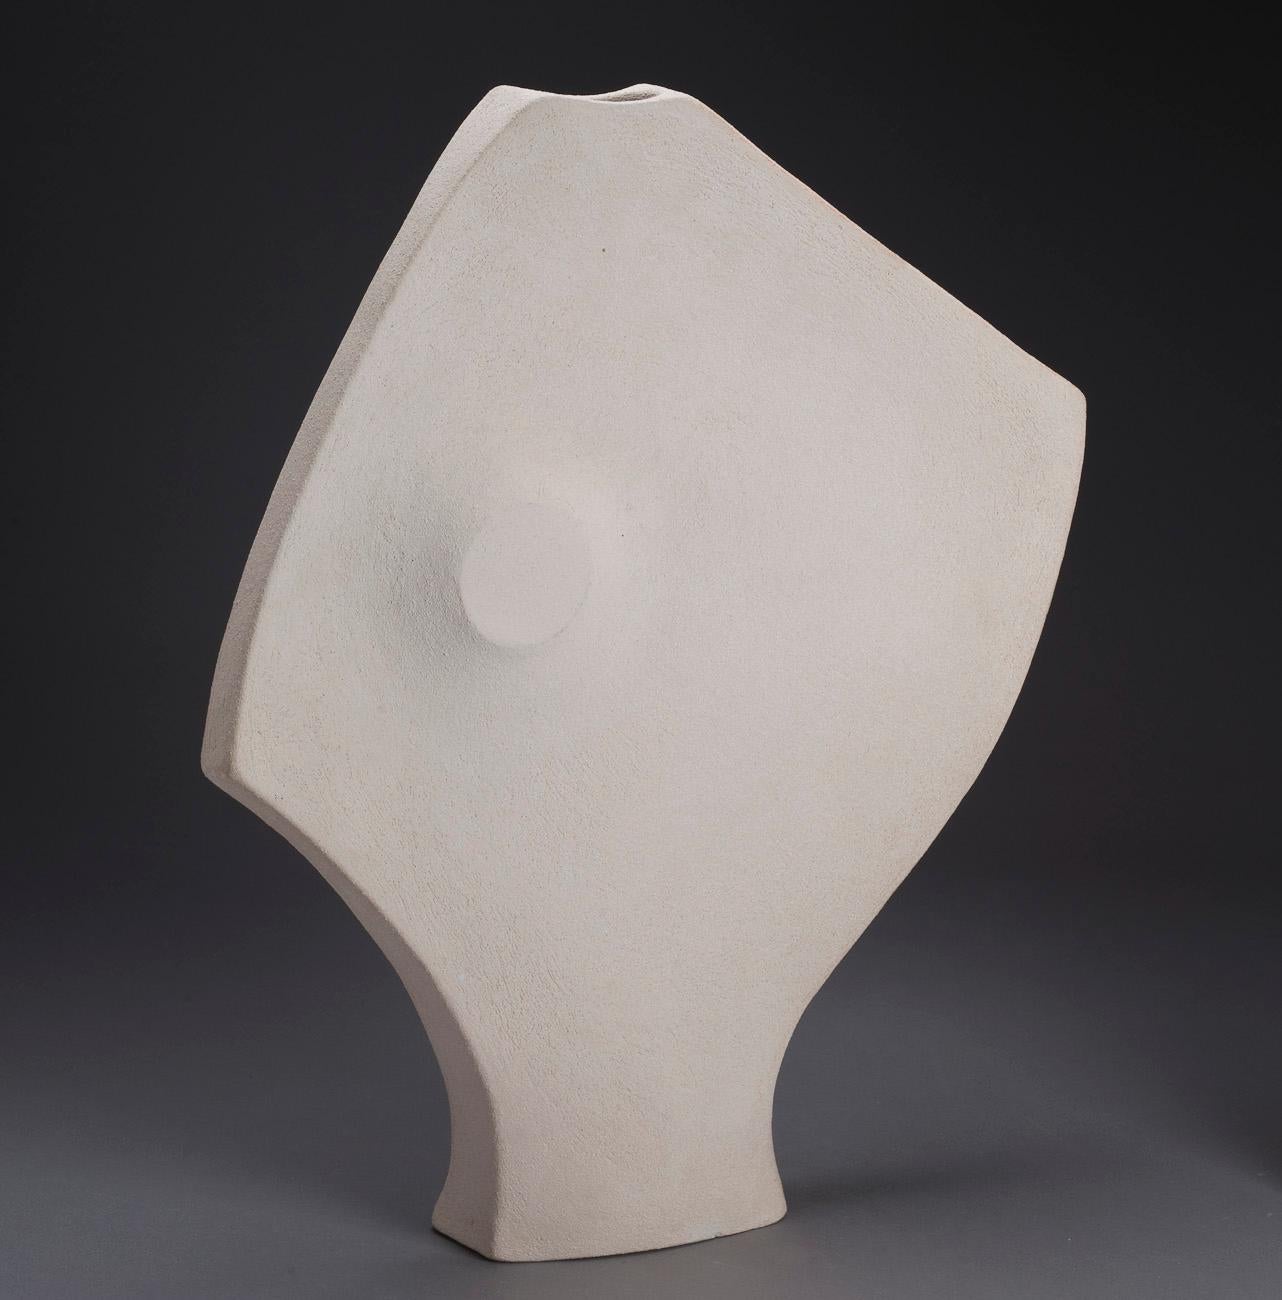 Steve Cartwright, Head Profile

Handmade Sculptural Ceramic, Stoneware Clay, fired to 1250c

40 x 45 cm (15.7 x 17.7 in)

Maximum edition of 5 per year